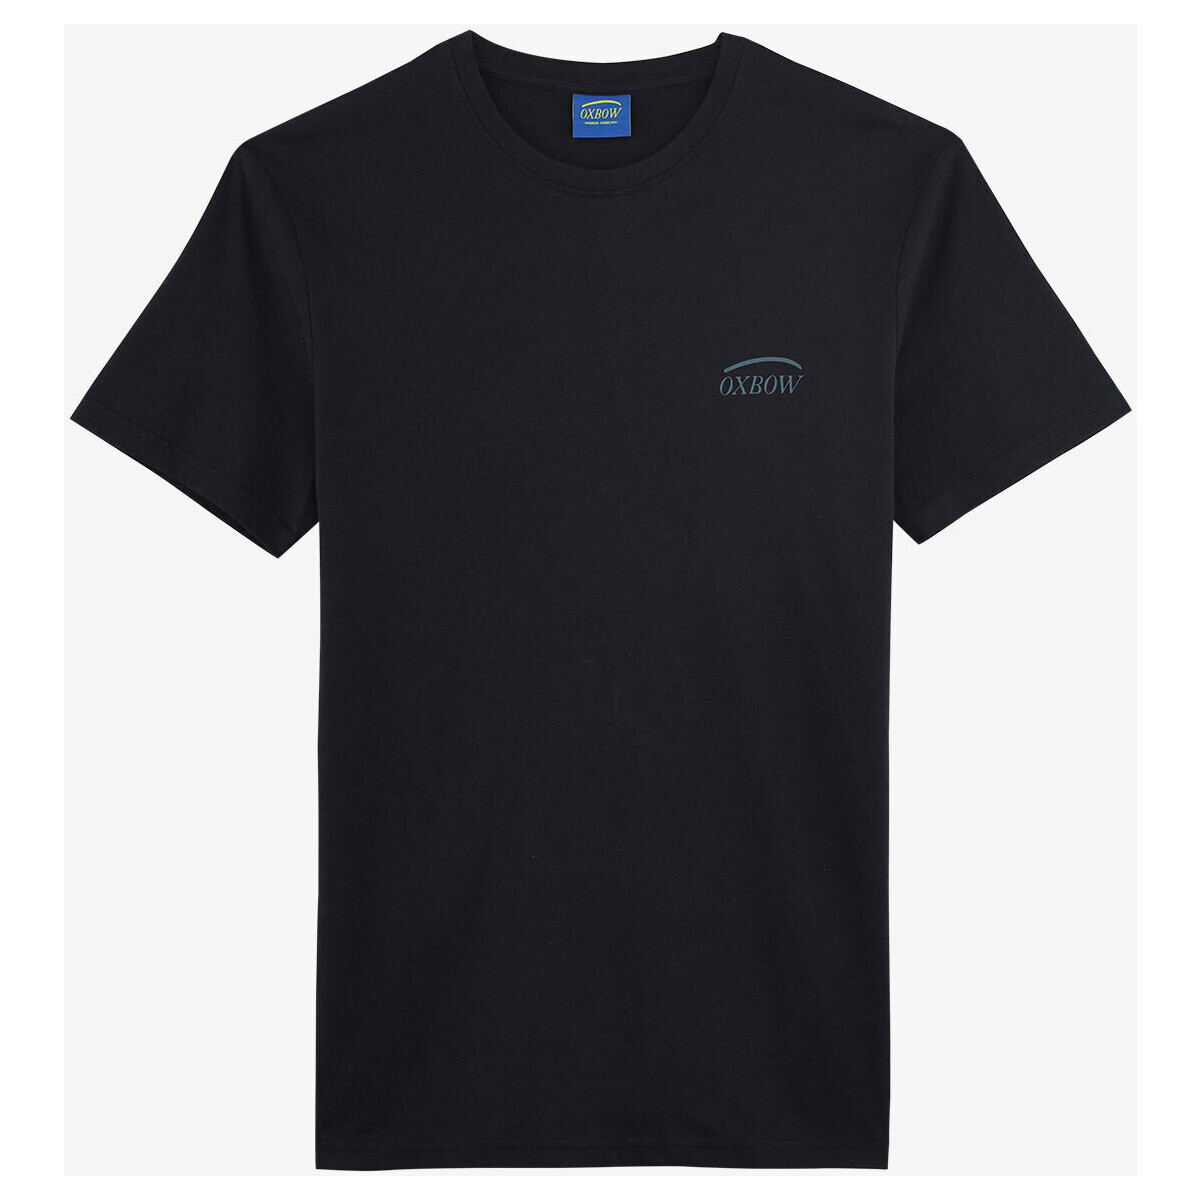 Oxbow Noir Tee-shirt manches courtes imprimé P2TUALF Vhgo9ltl